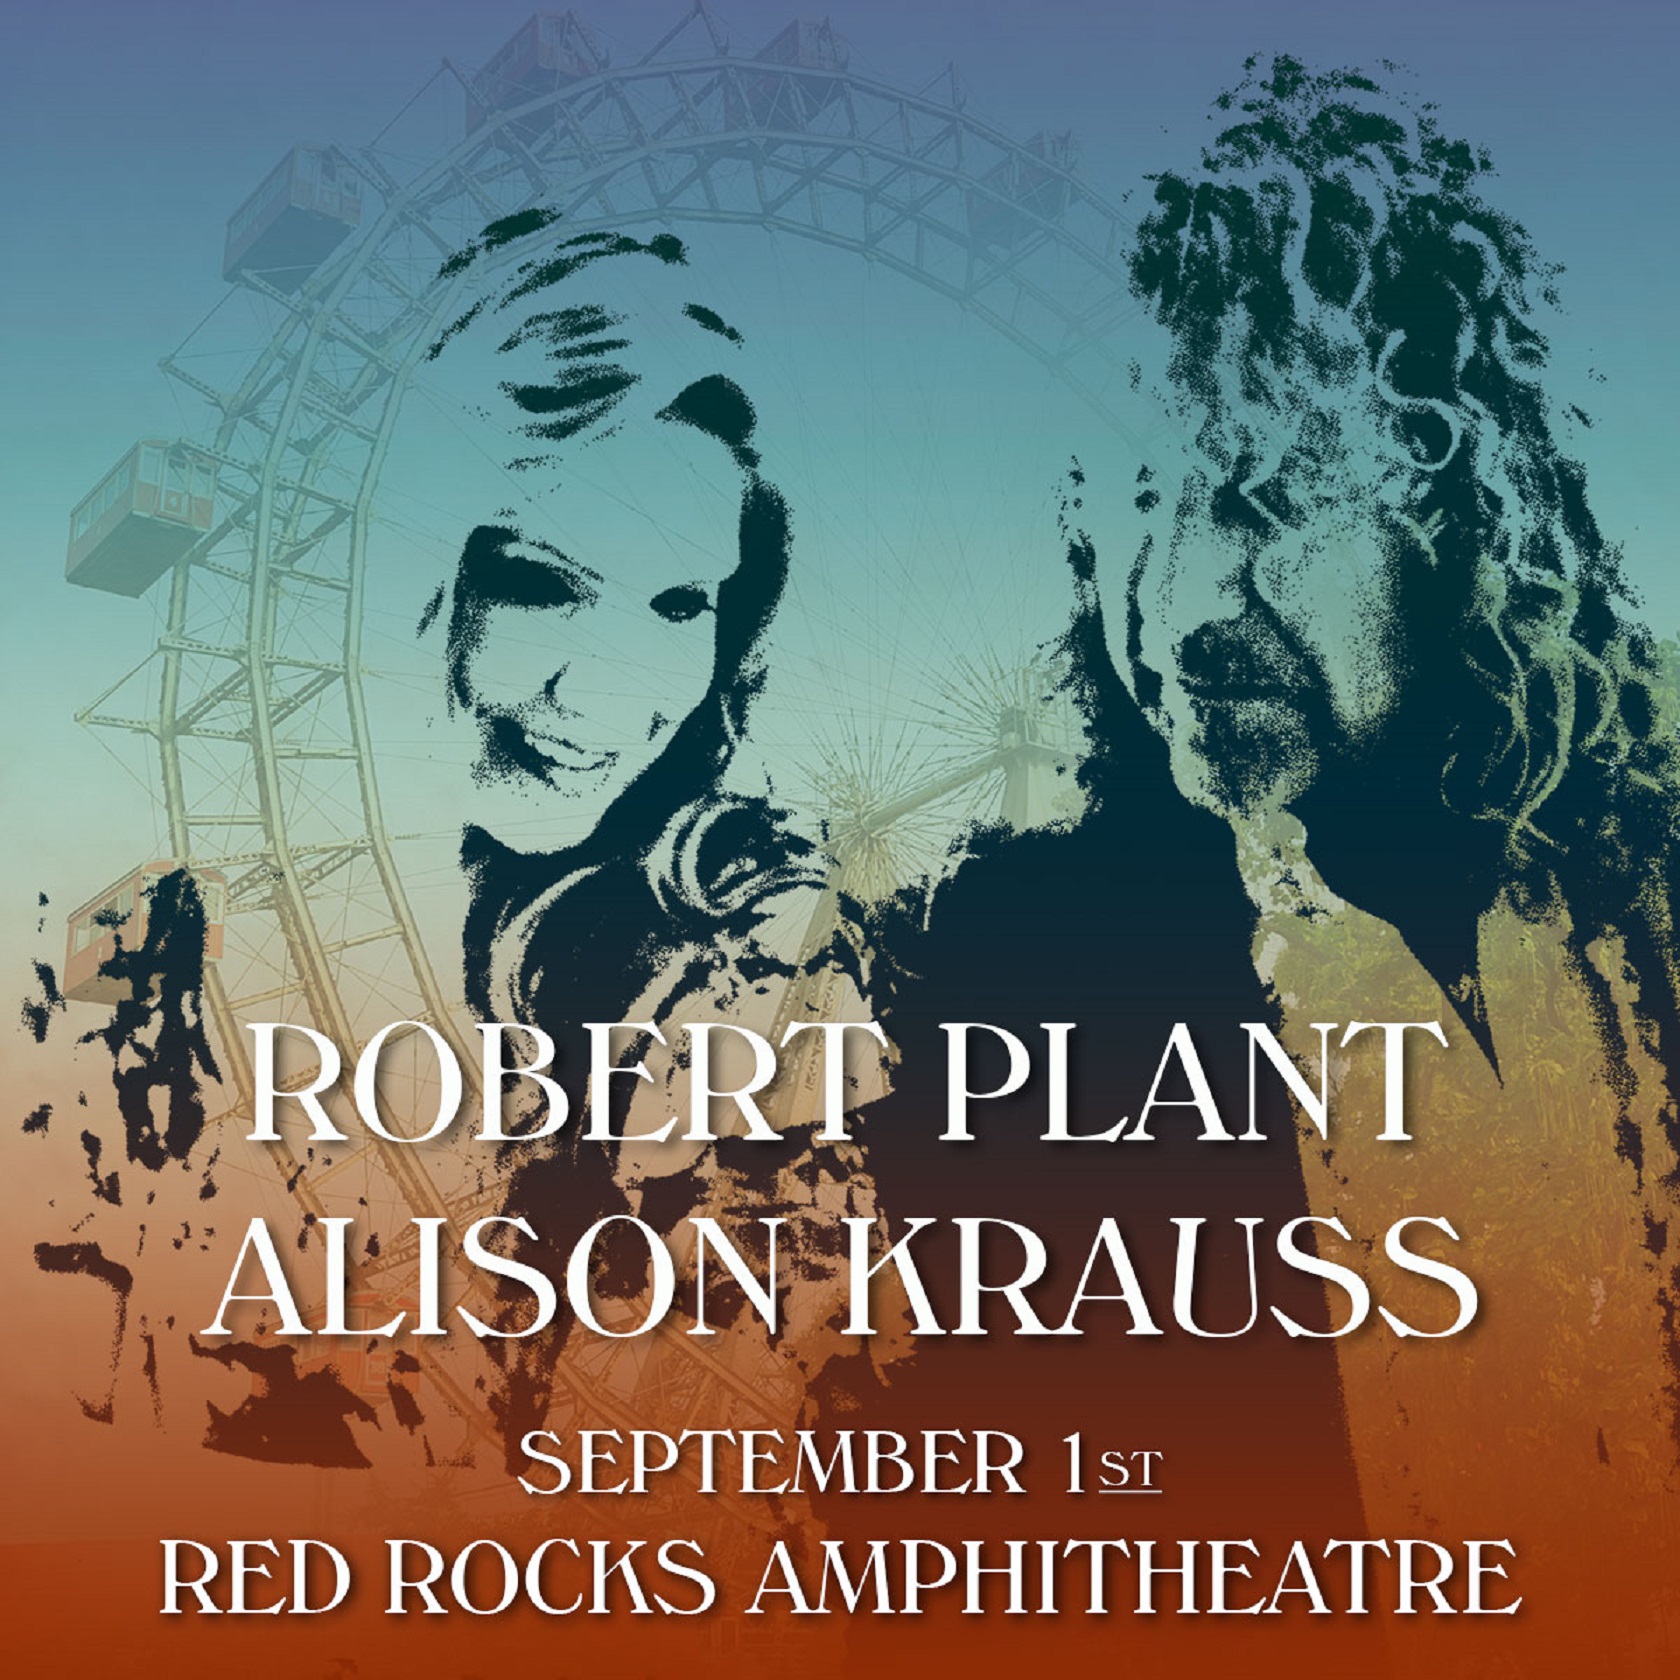 Robert Plant & Alison Krauss Announce Second Leg of US Tour